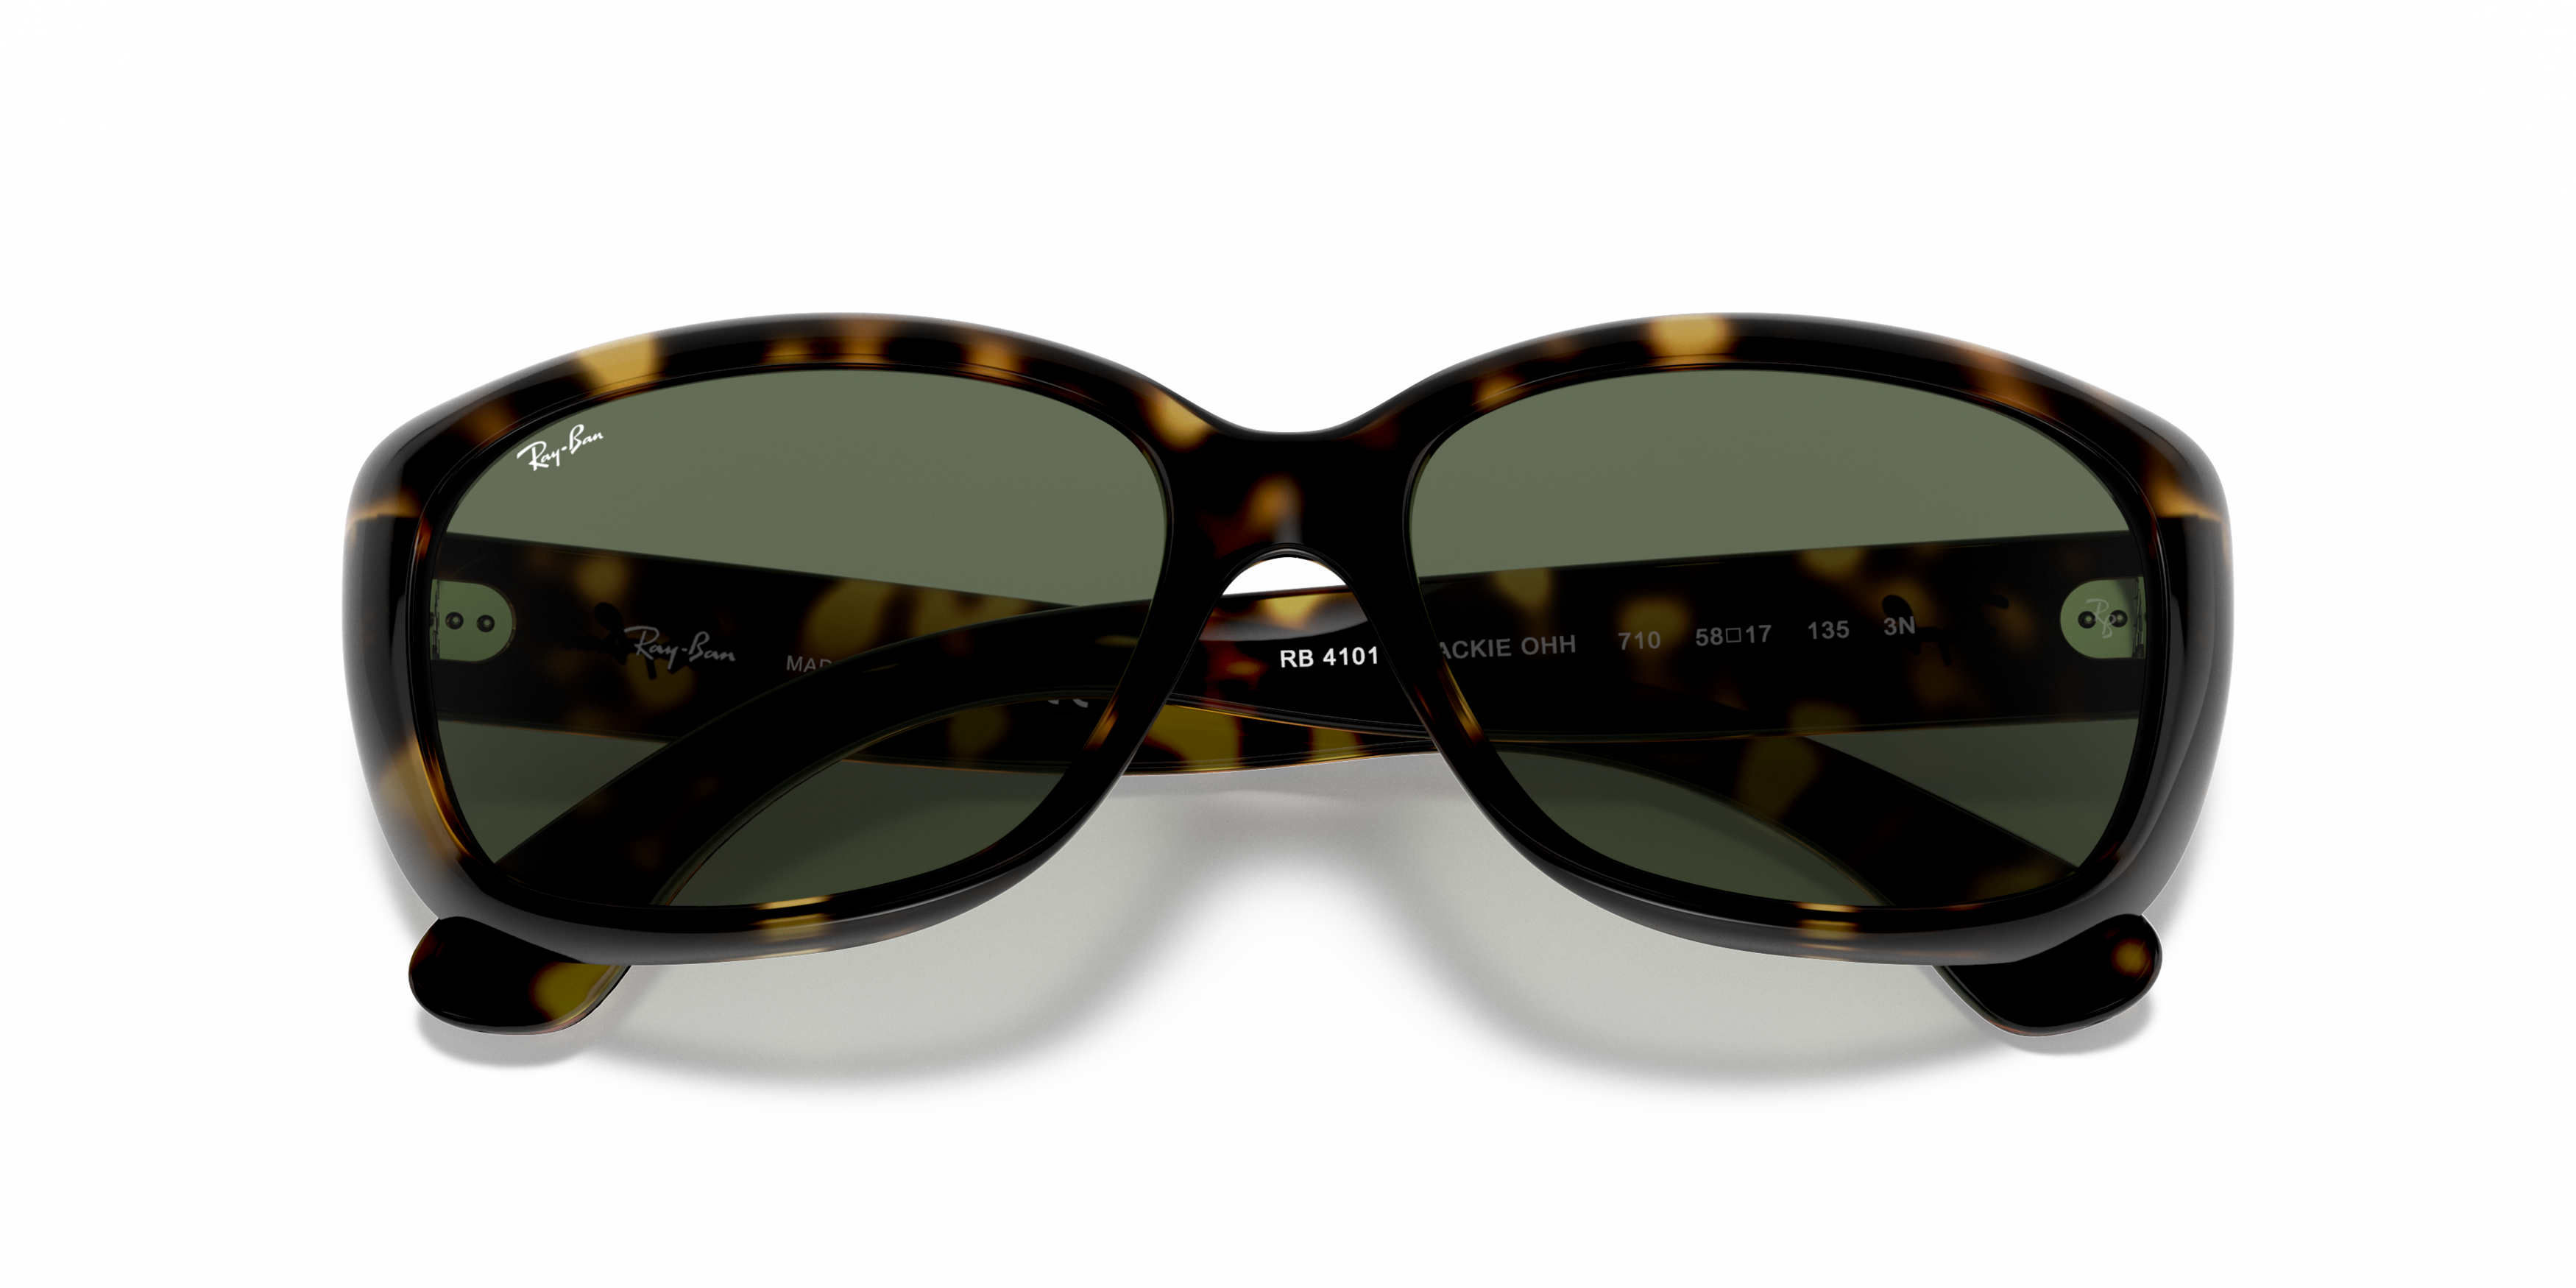 Folded Ray-Ban Jackie Ohh RB 4101 Sunglasses Green / Tortoise Shell